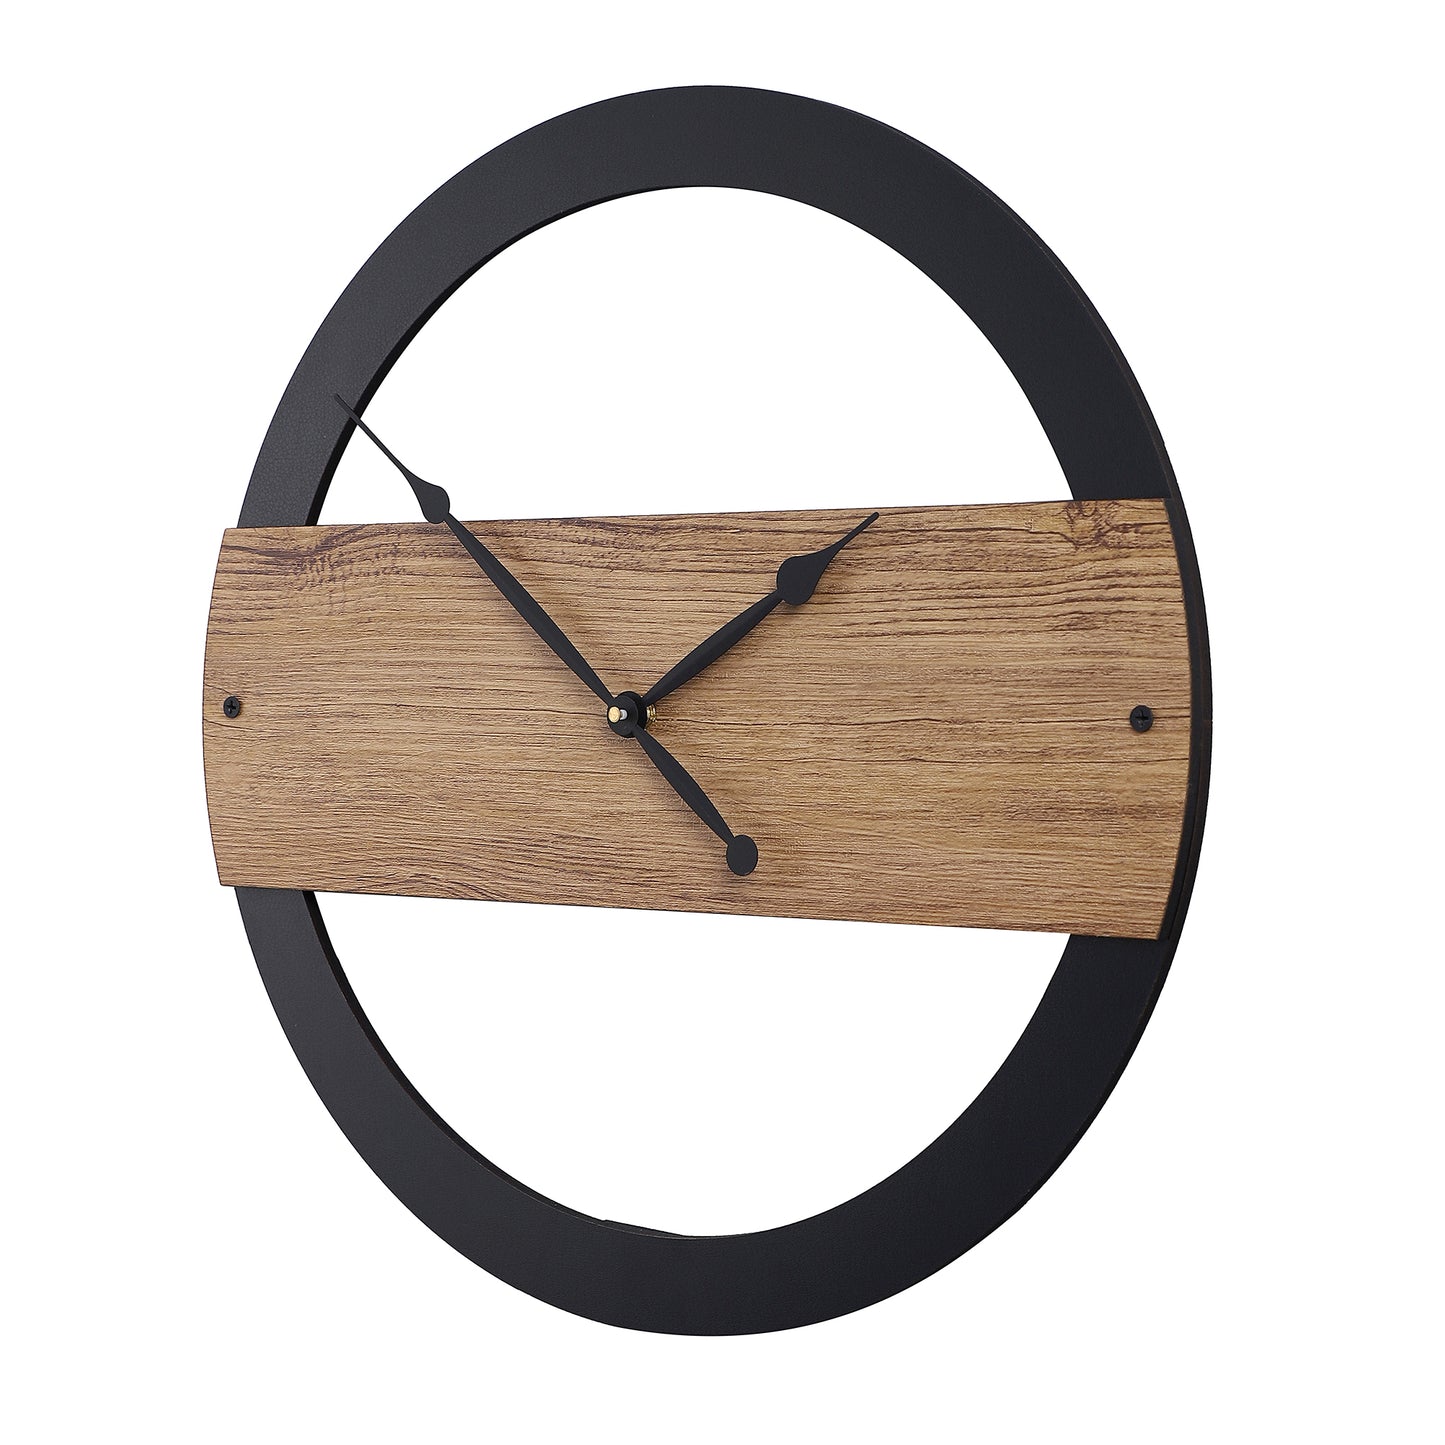 Elegant 16-Inch Brown Wall Clock with Black Round Design